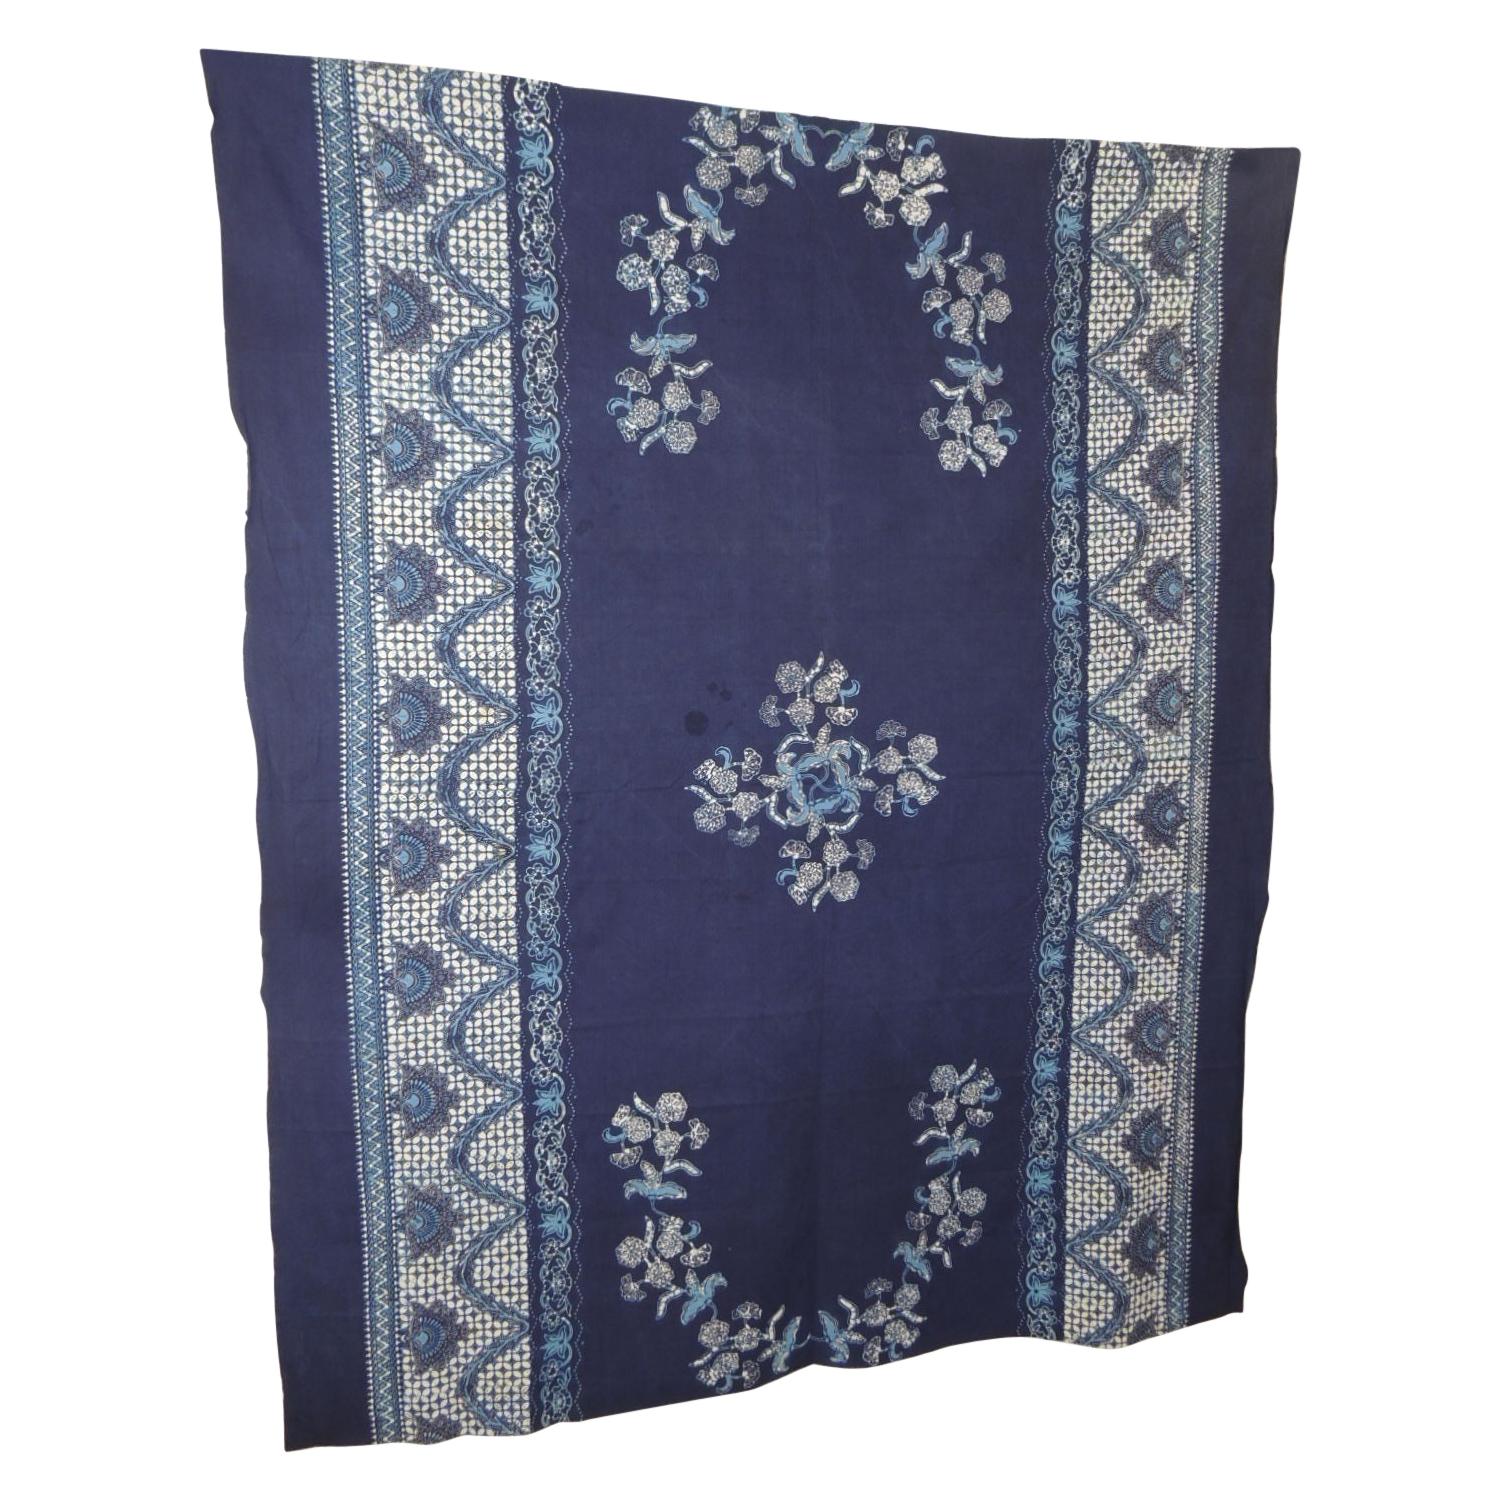 Vintage Large Blue and White Hand-Blocked Indian Batik Textile